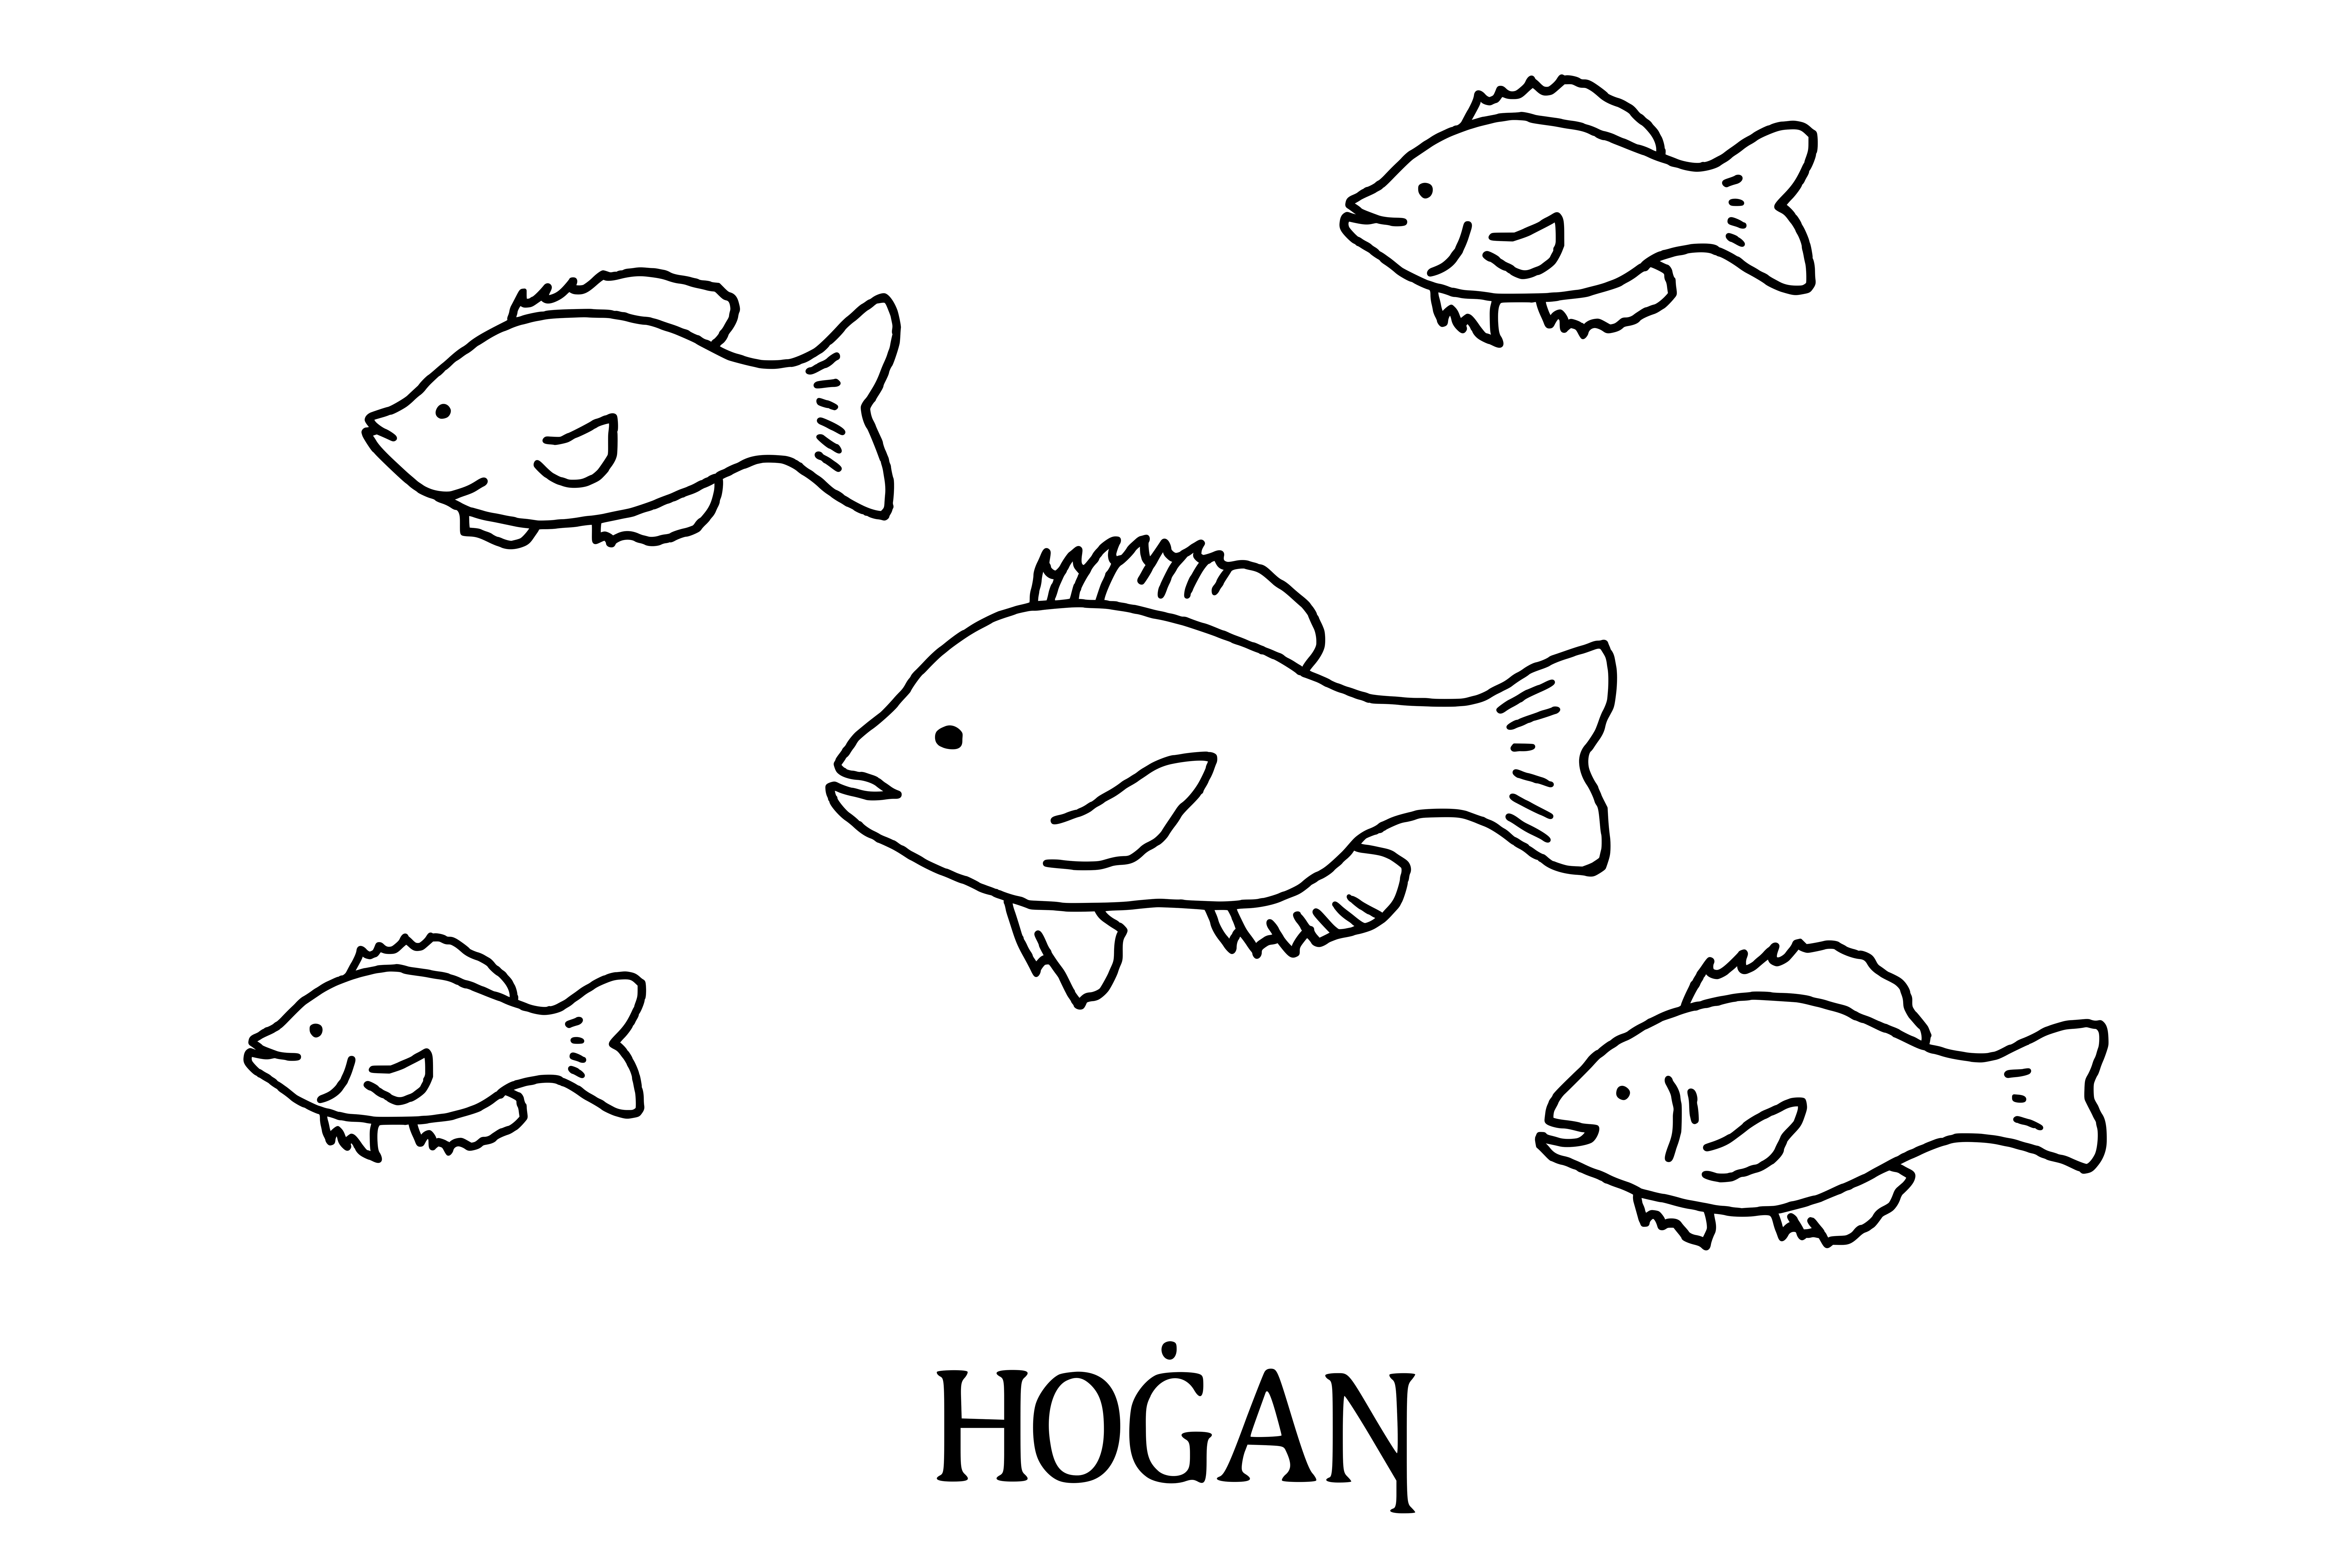 Hogan-Fish Sidewalk Stamp